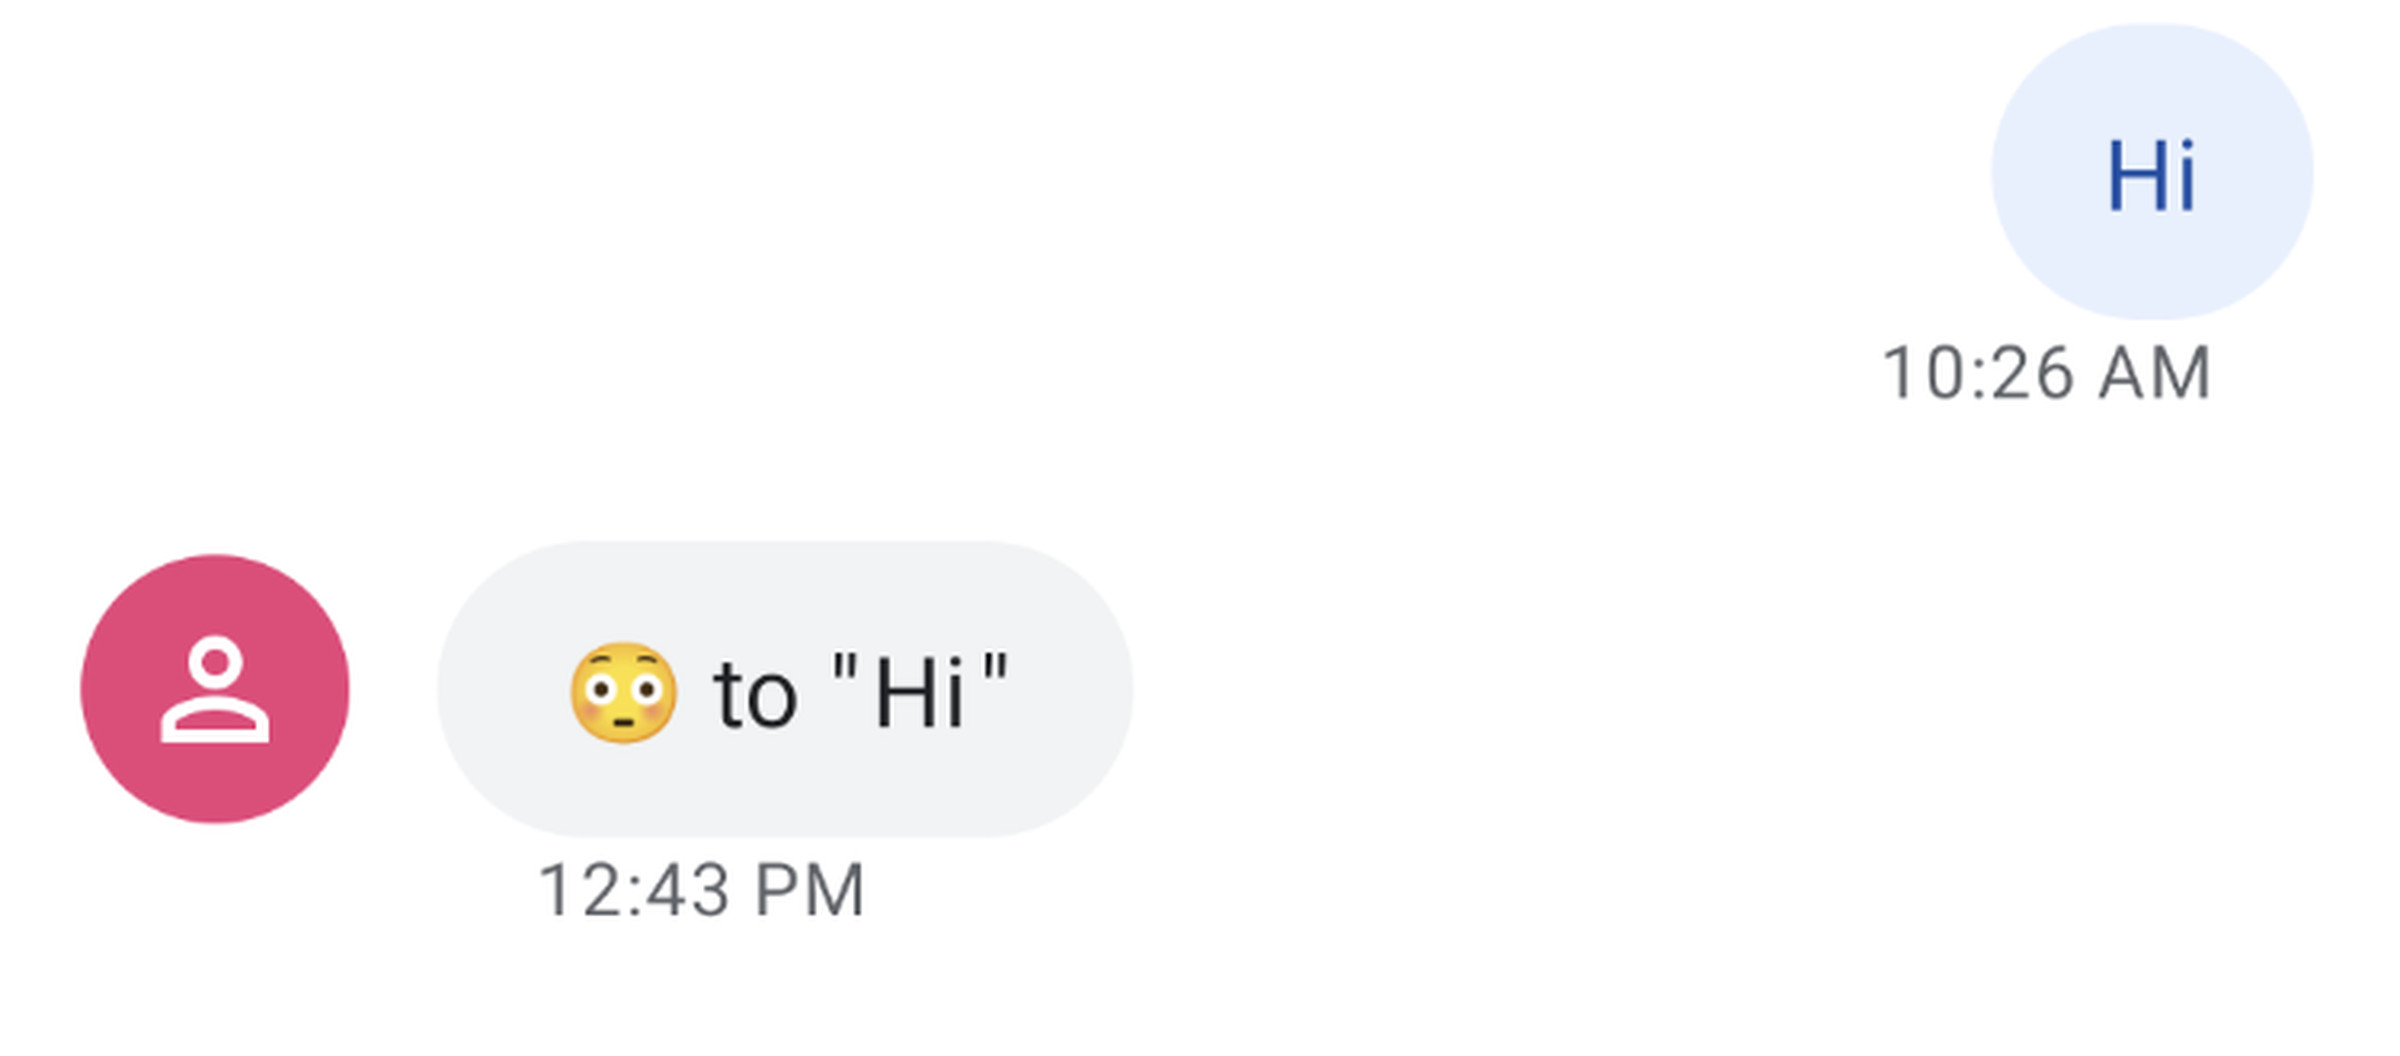 A screenshot of a text message conversation.  One message says 